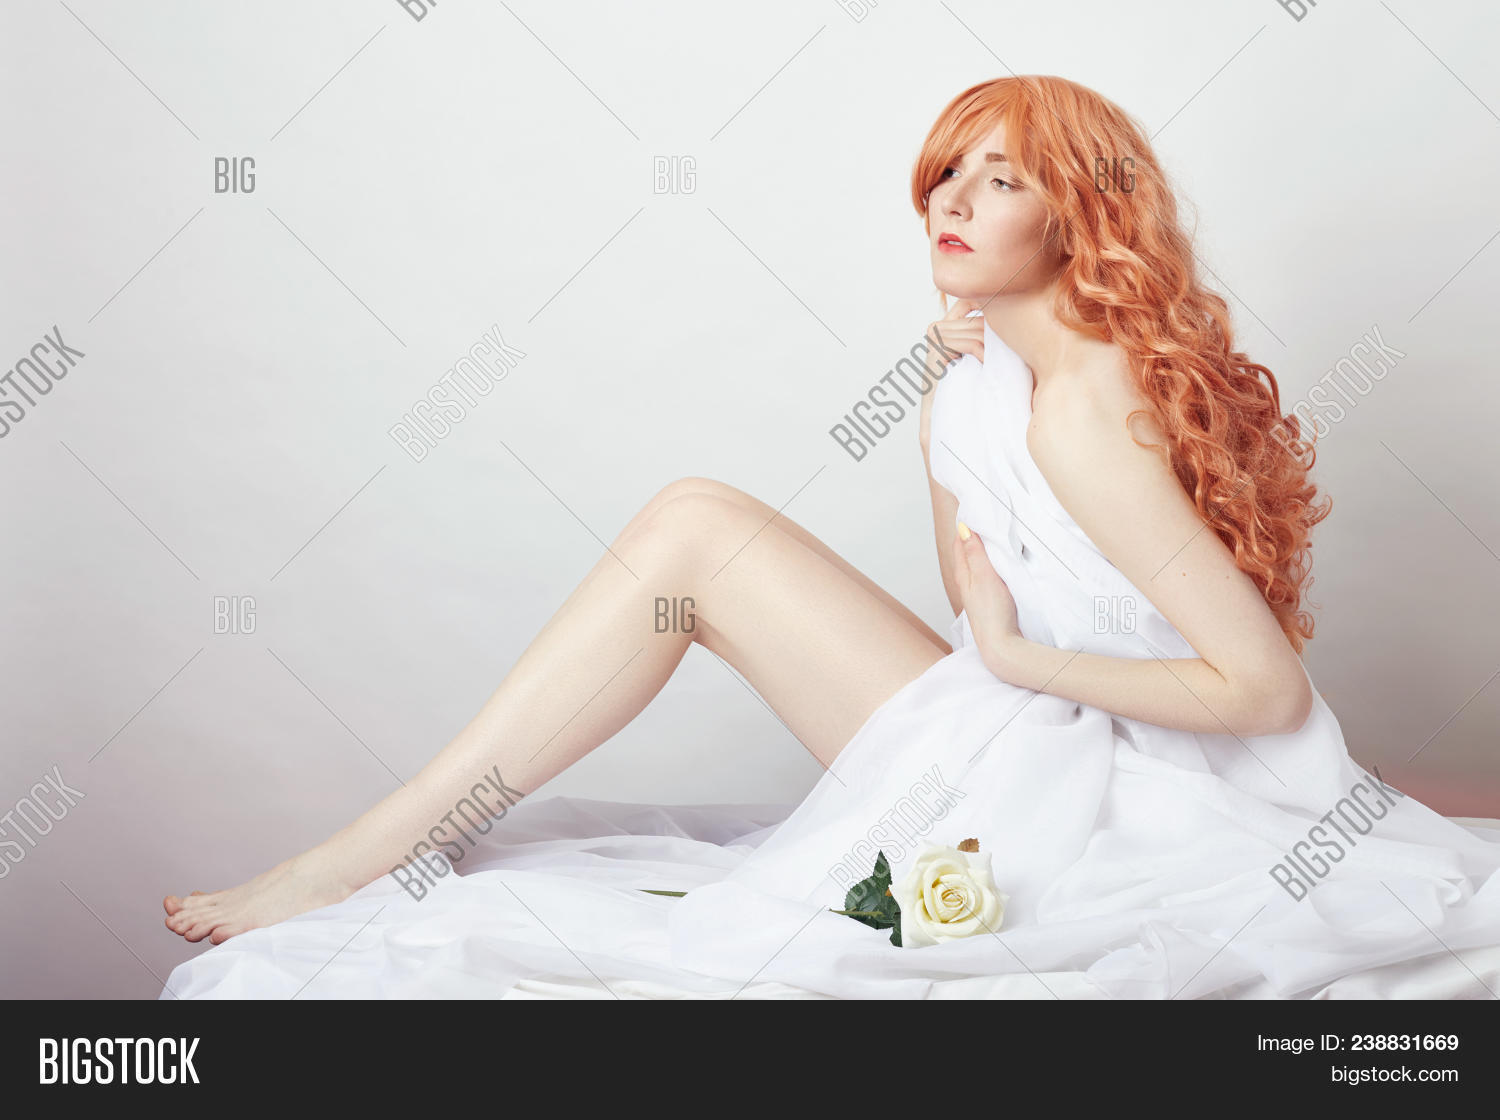 benjamin edward stiller recommends Hot Redhead Naked Female Sitting